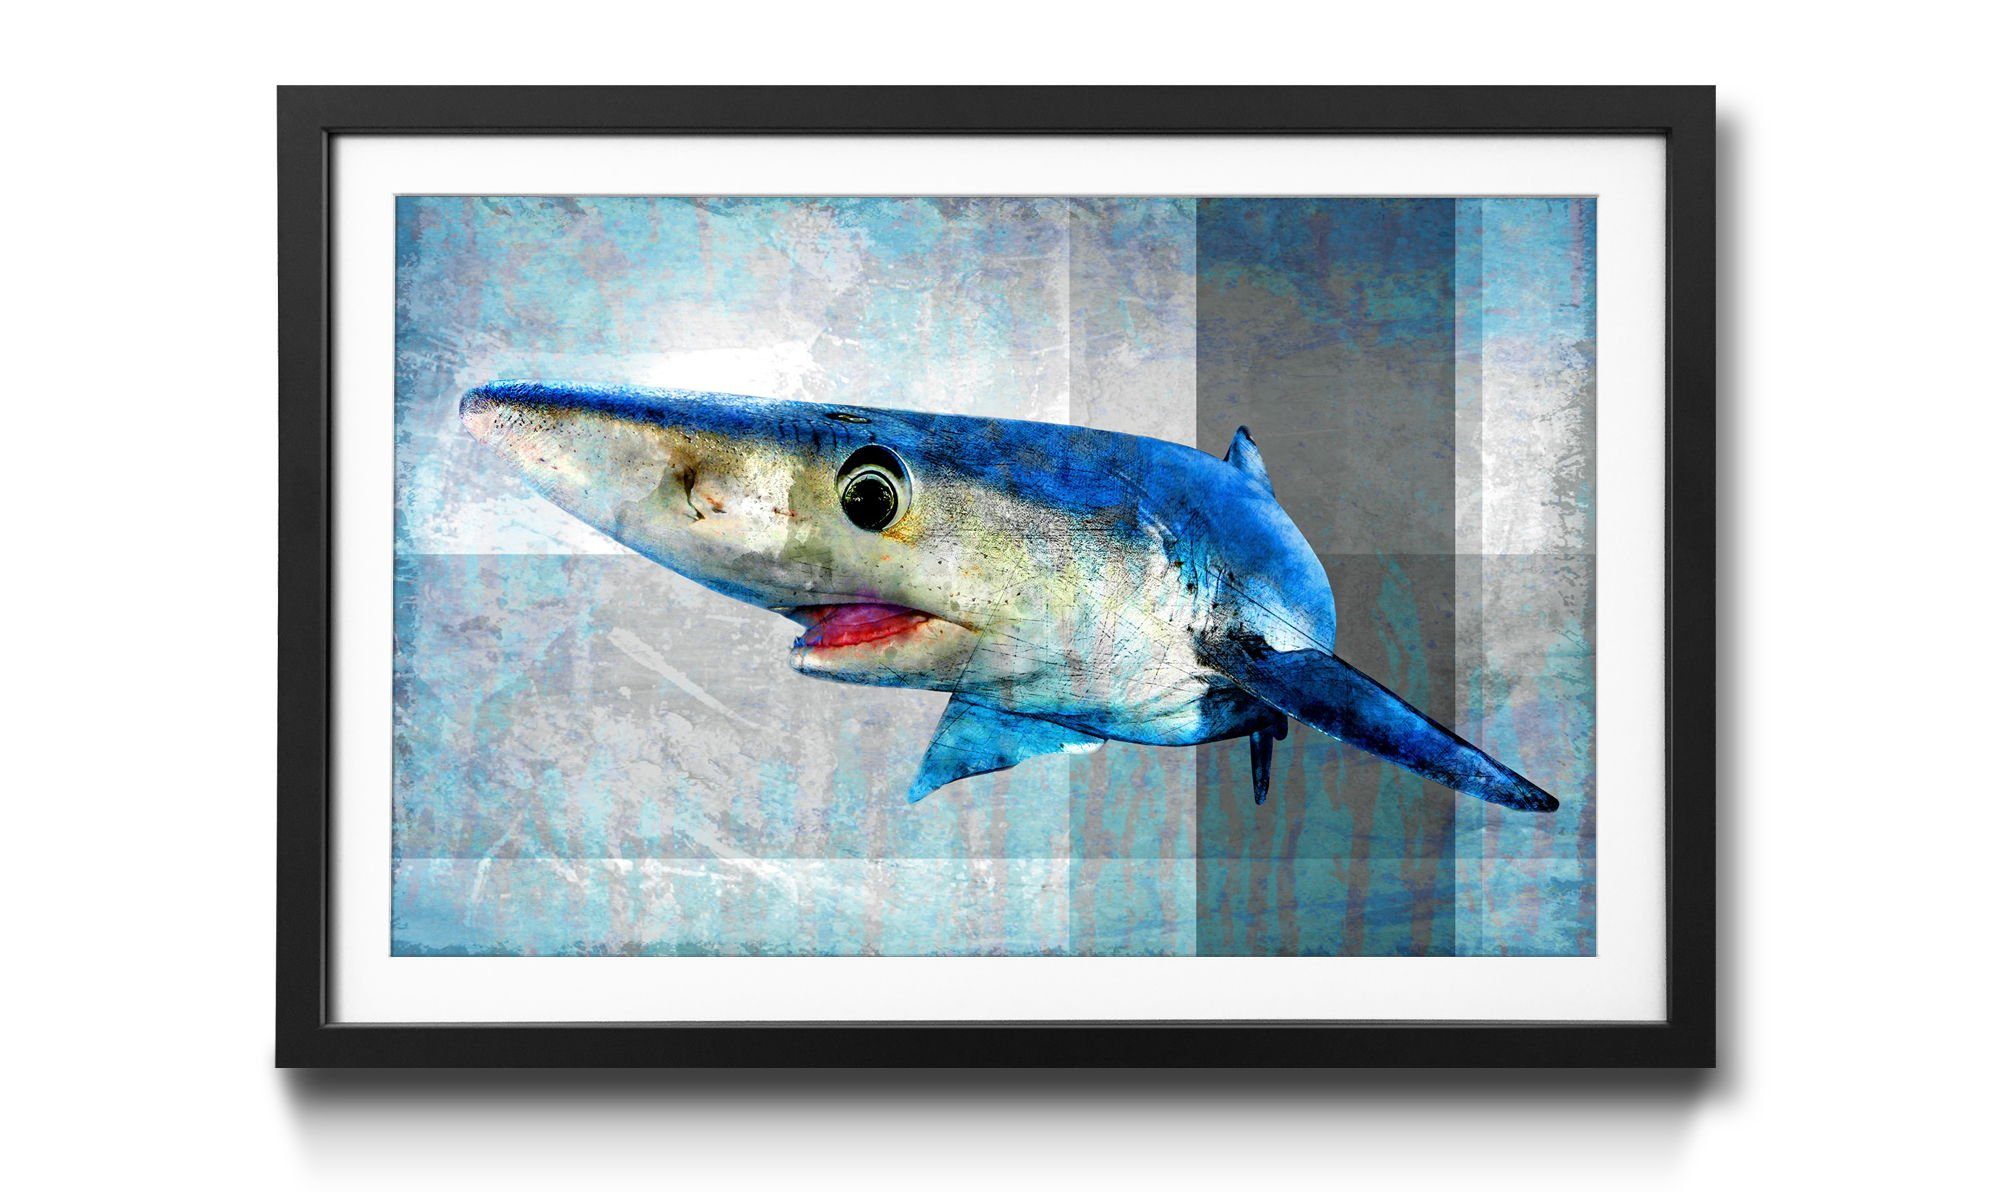 WandbilderXXL Kunstdruck Mr. Shark, Hai, Wandbild, in 4 Größen erhältlich